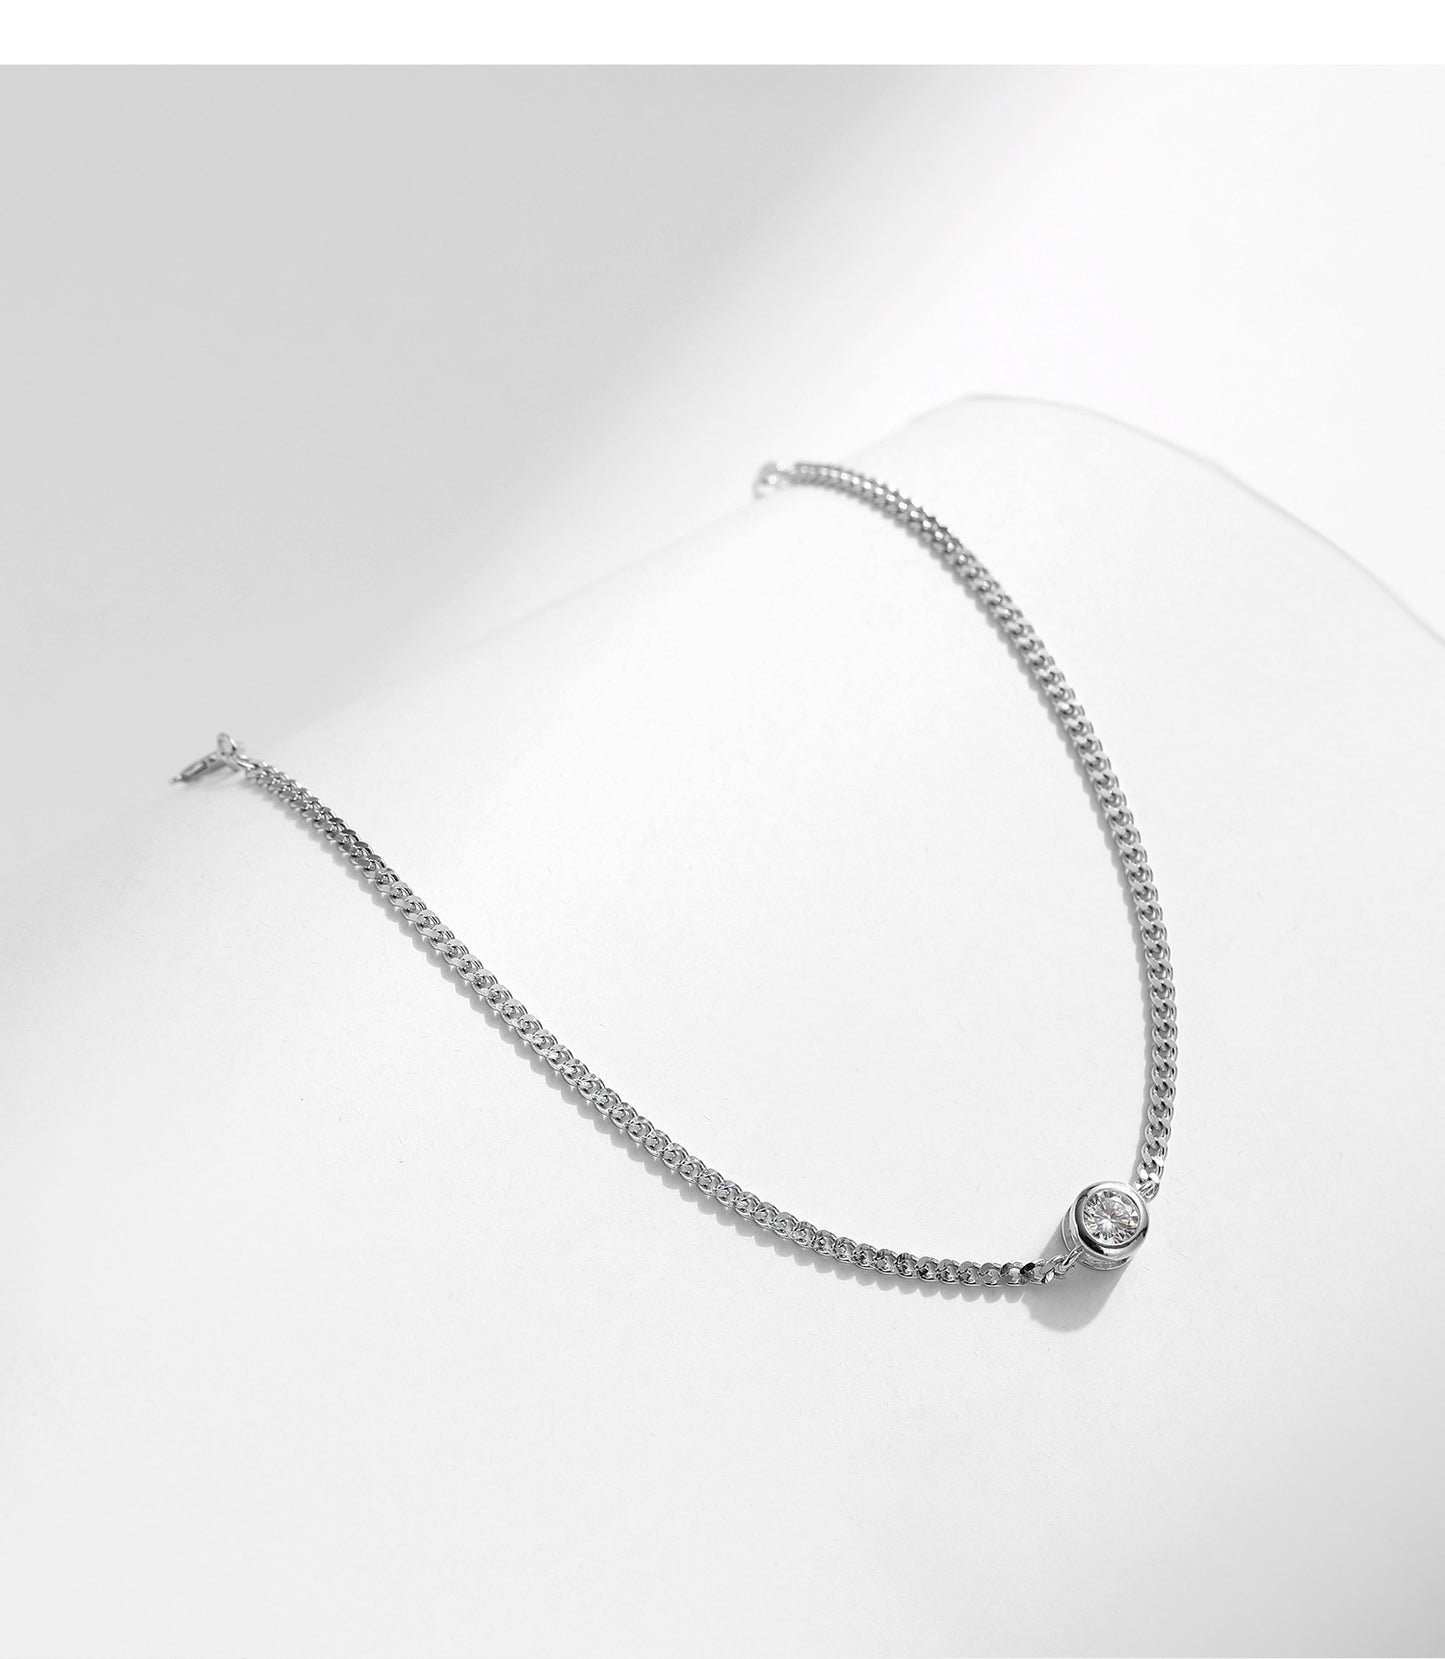 Sparkling Moissanite Sterling Silver Bracelet - Elegant and Simple Korean Jewelry